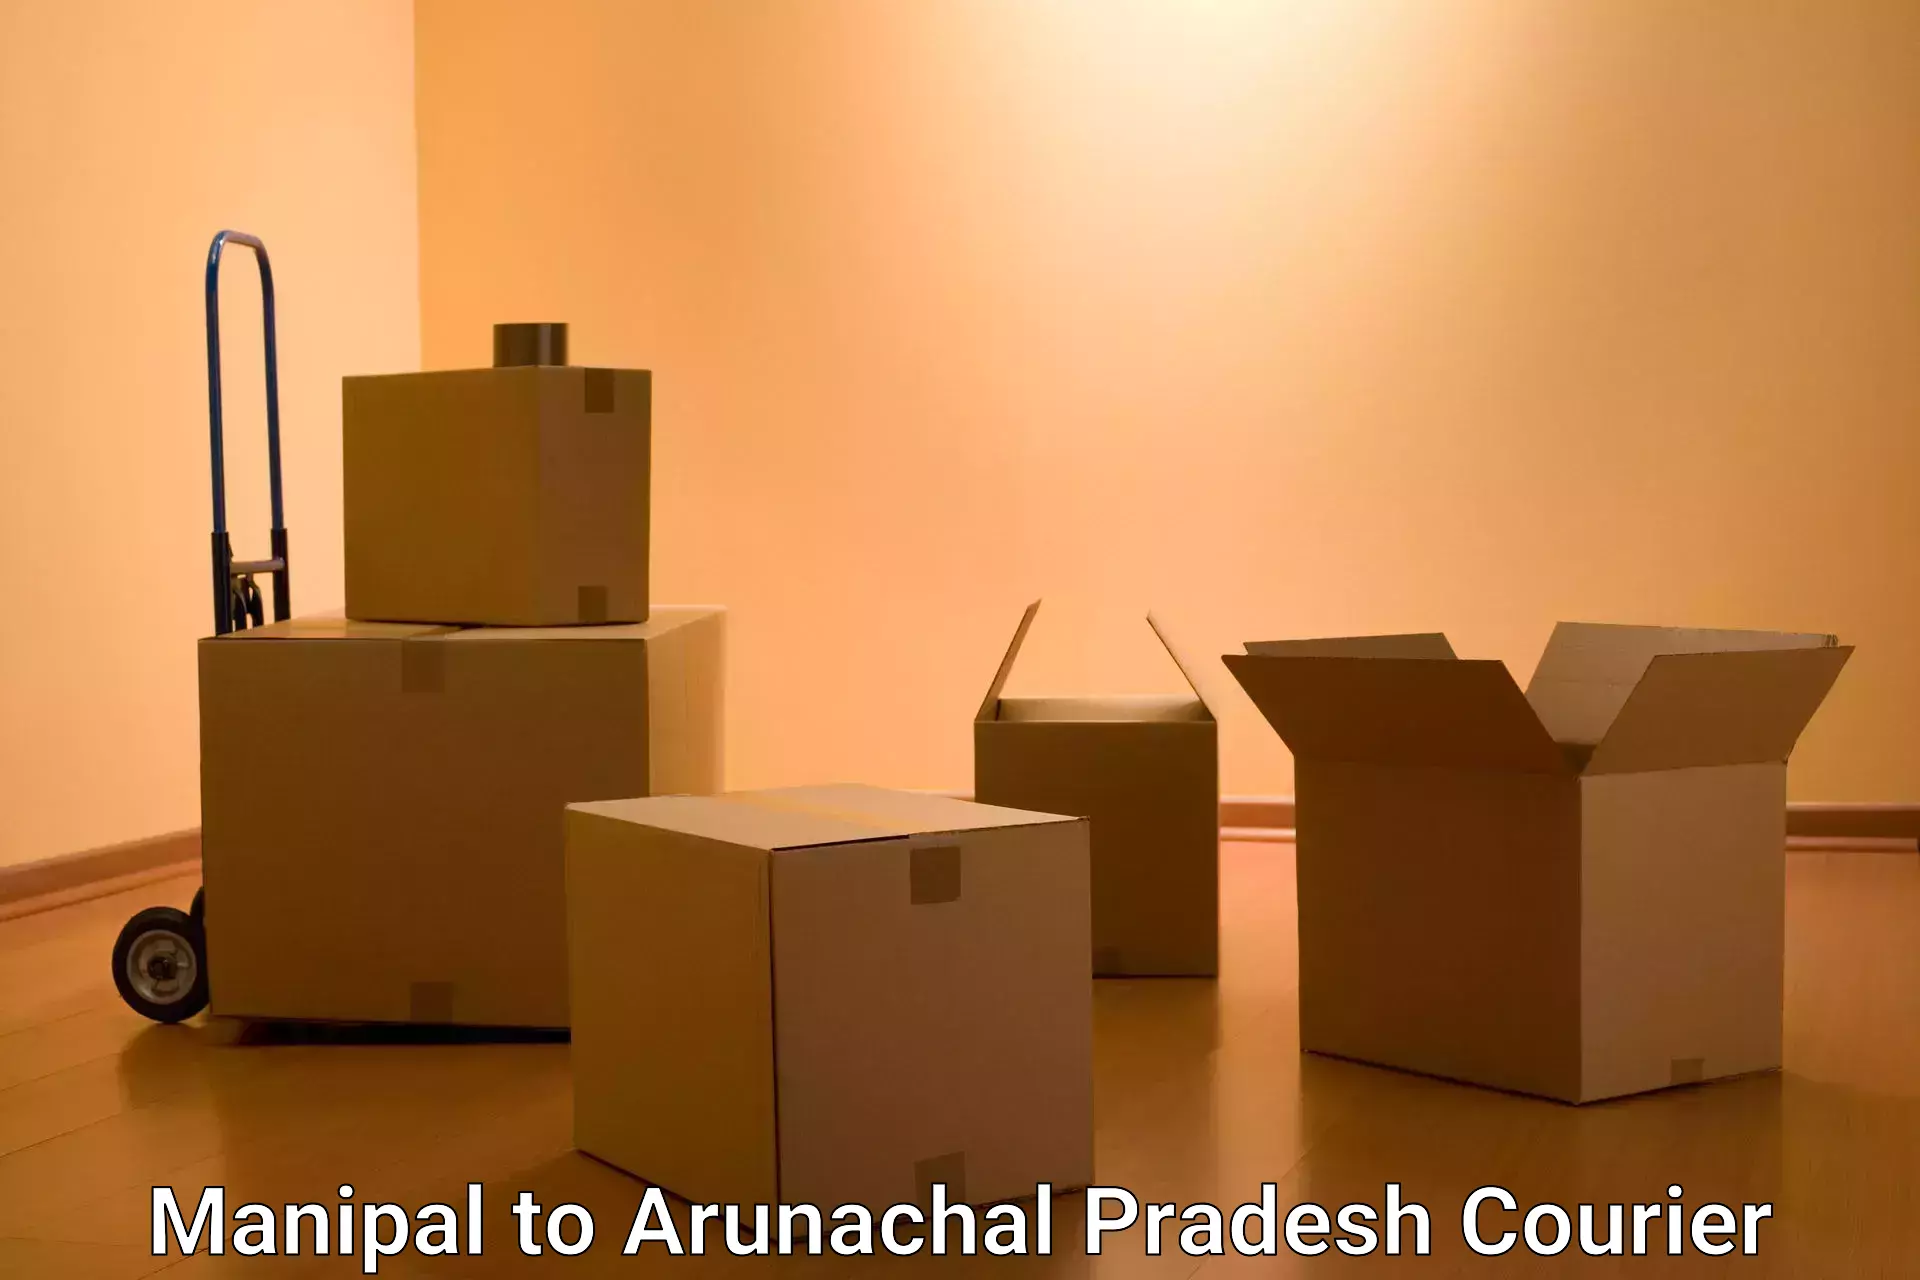 Courier service booking in Manipal to Arunachal Pradesh